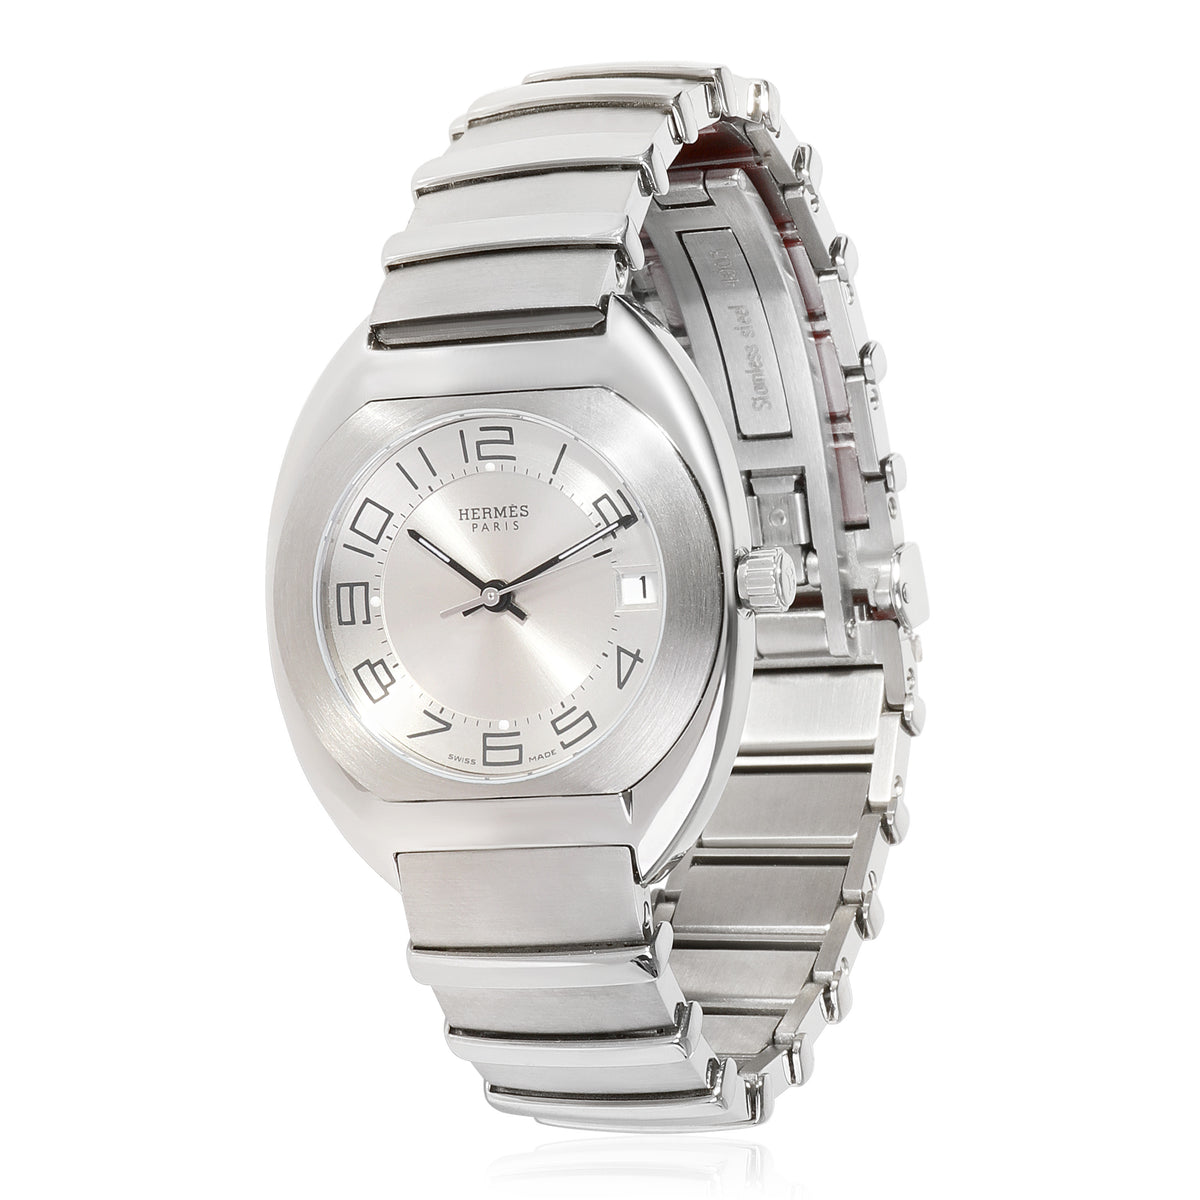 Hermès Espace ES2.210.230.4903 Women's Watch in  Stainless Steel